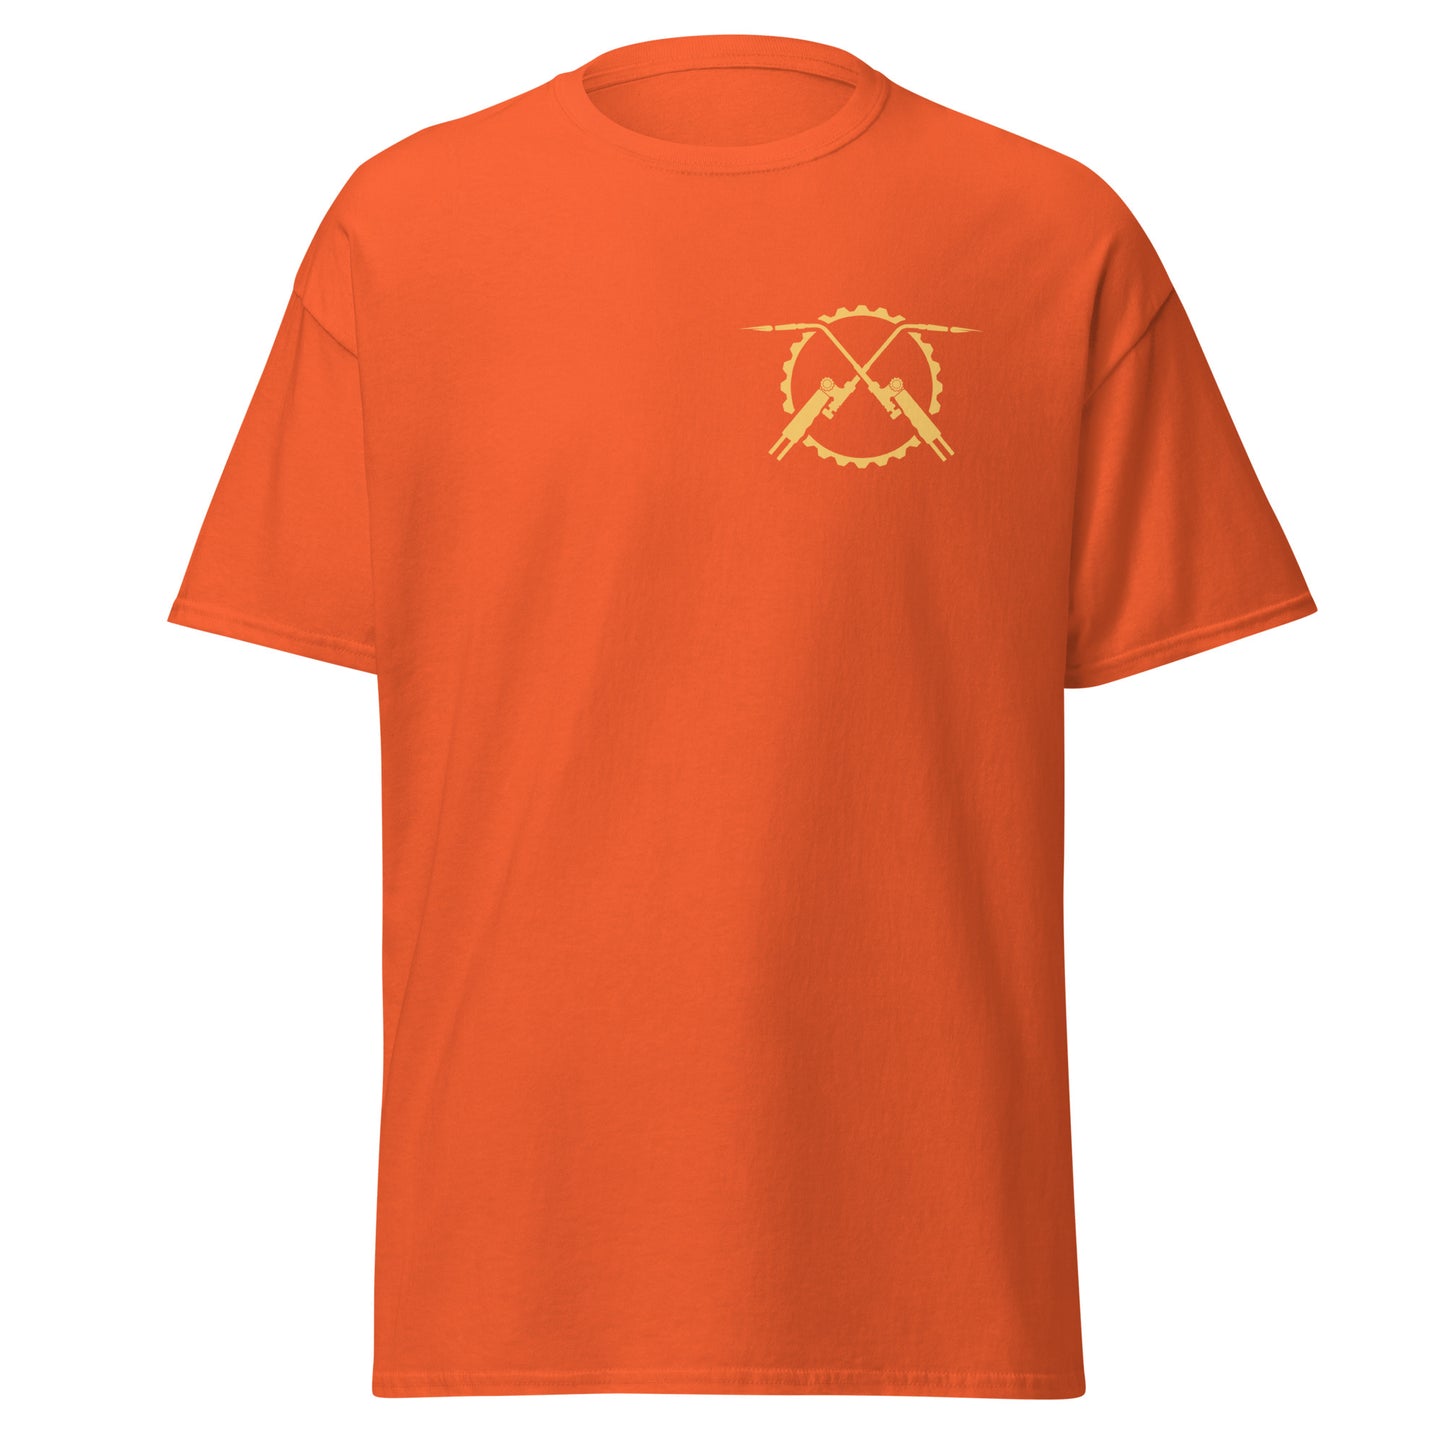 The Divine Guardian T-shirt